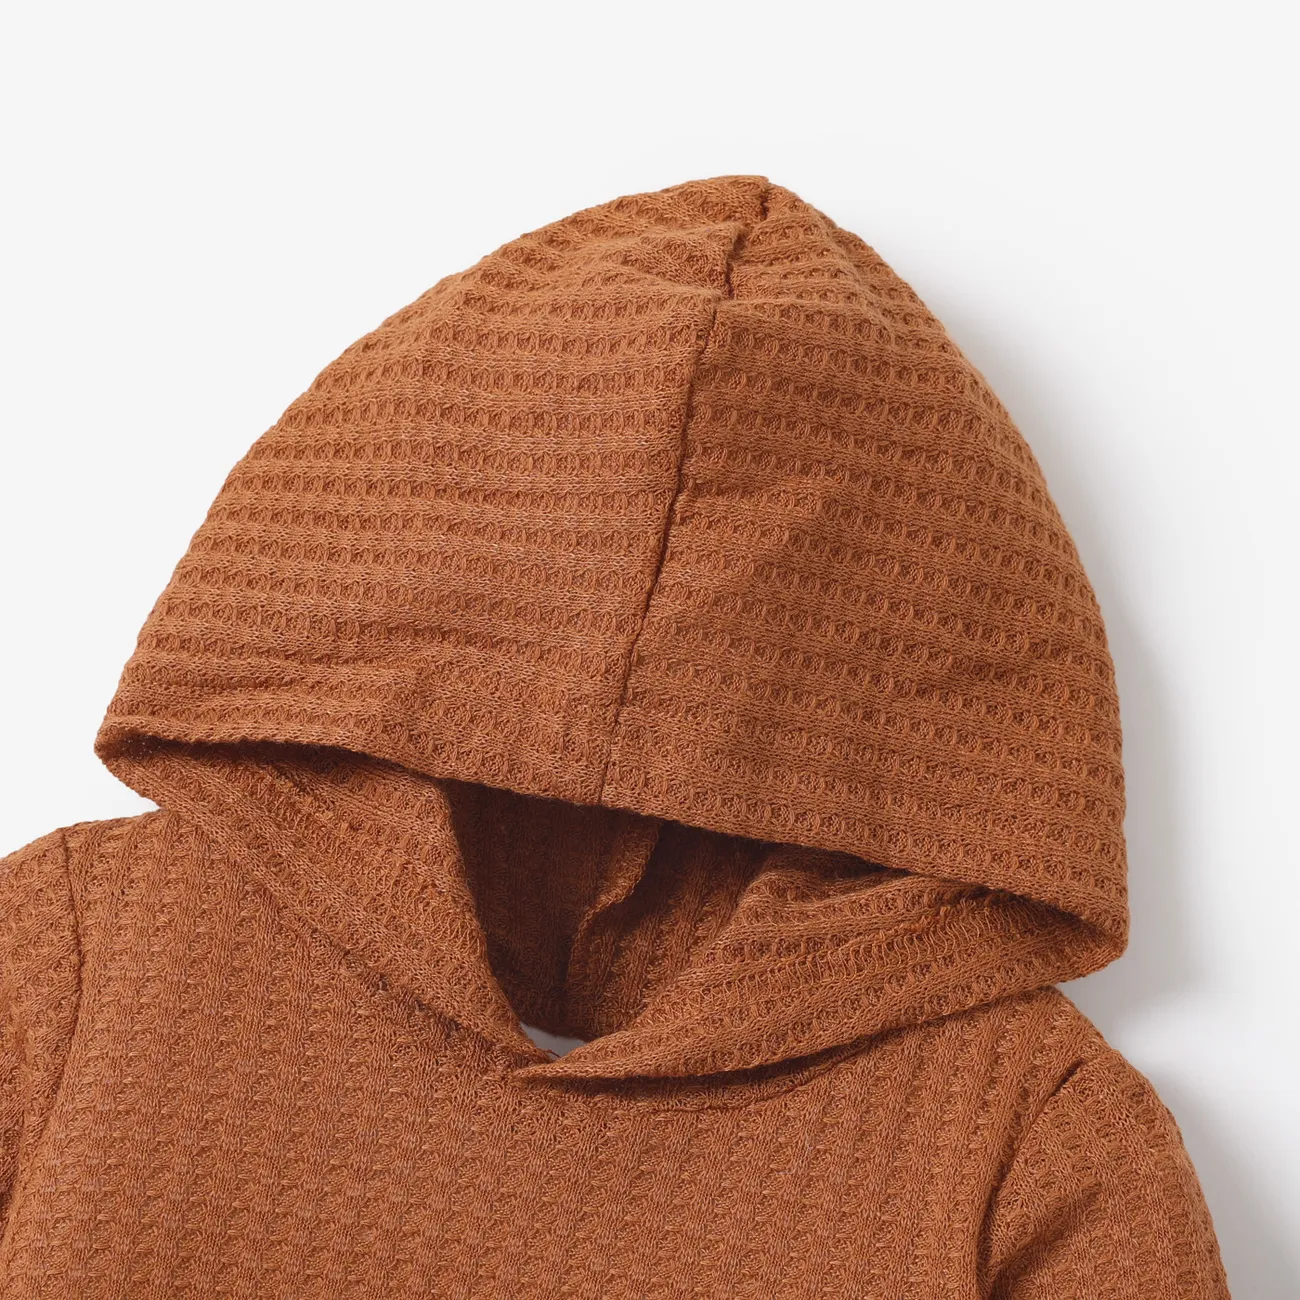 2-piece Baby Boy/Girl Waffle Hoodie Sweatshirt and 100% Cotton Ripped Denim Jeans Set Orange big image 1